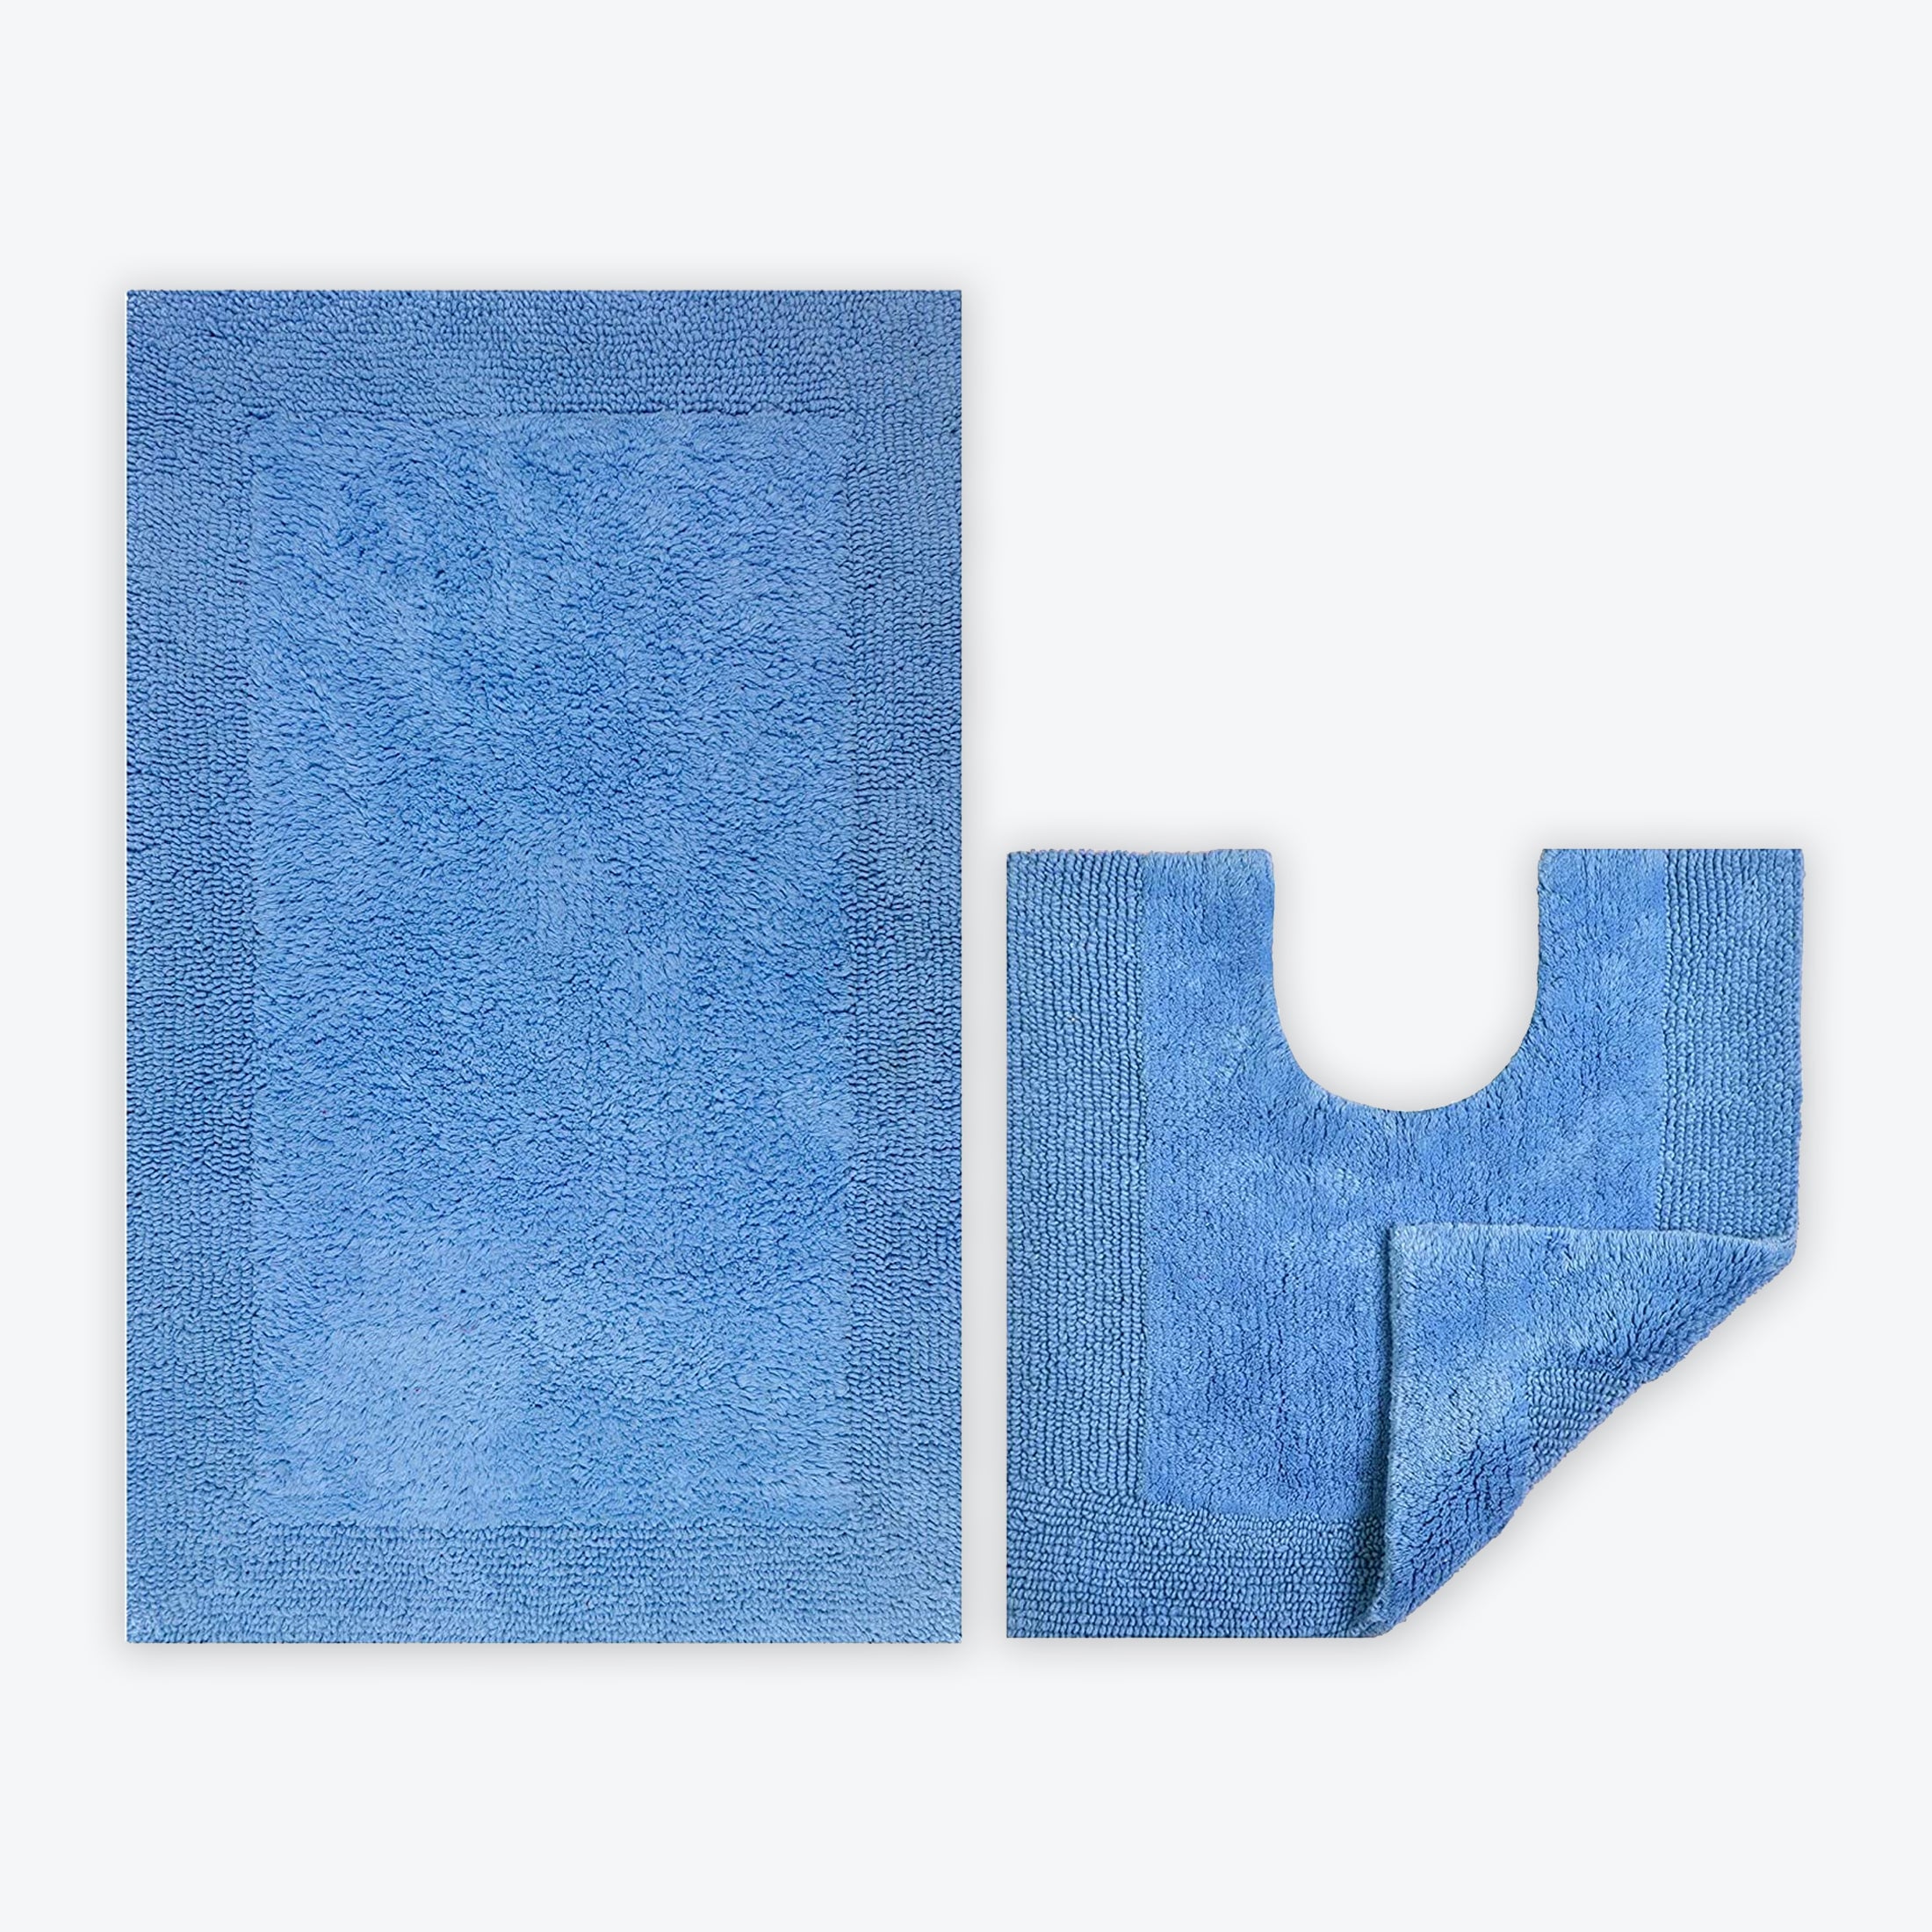 Cornish blue bath mat and pedestal mat 2pc set luxury reversible bathroom mats